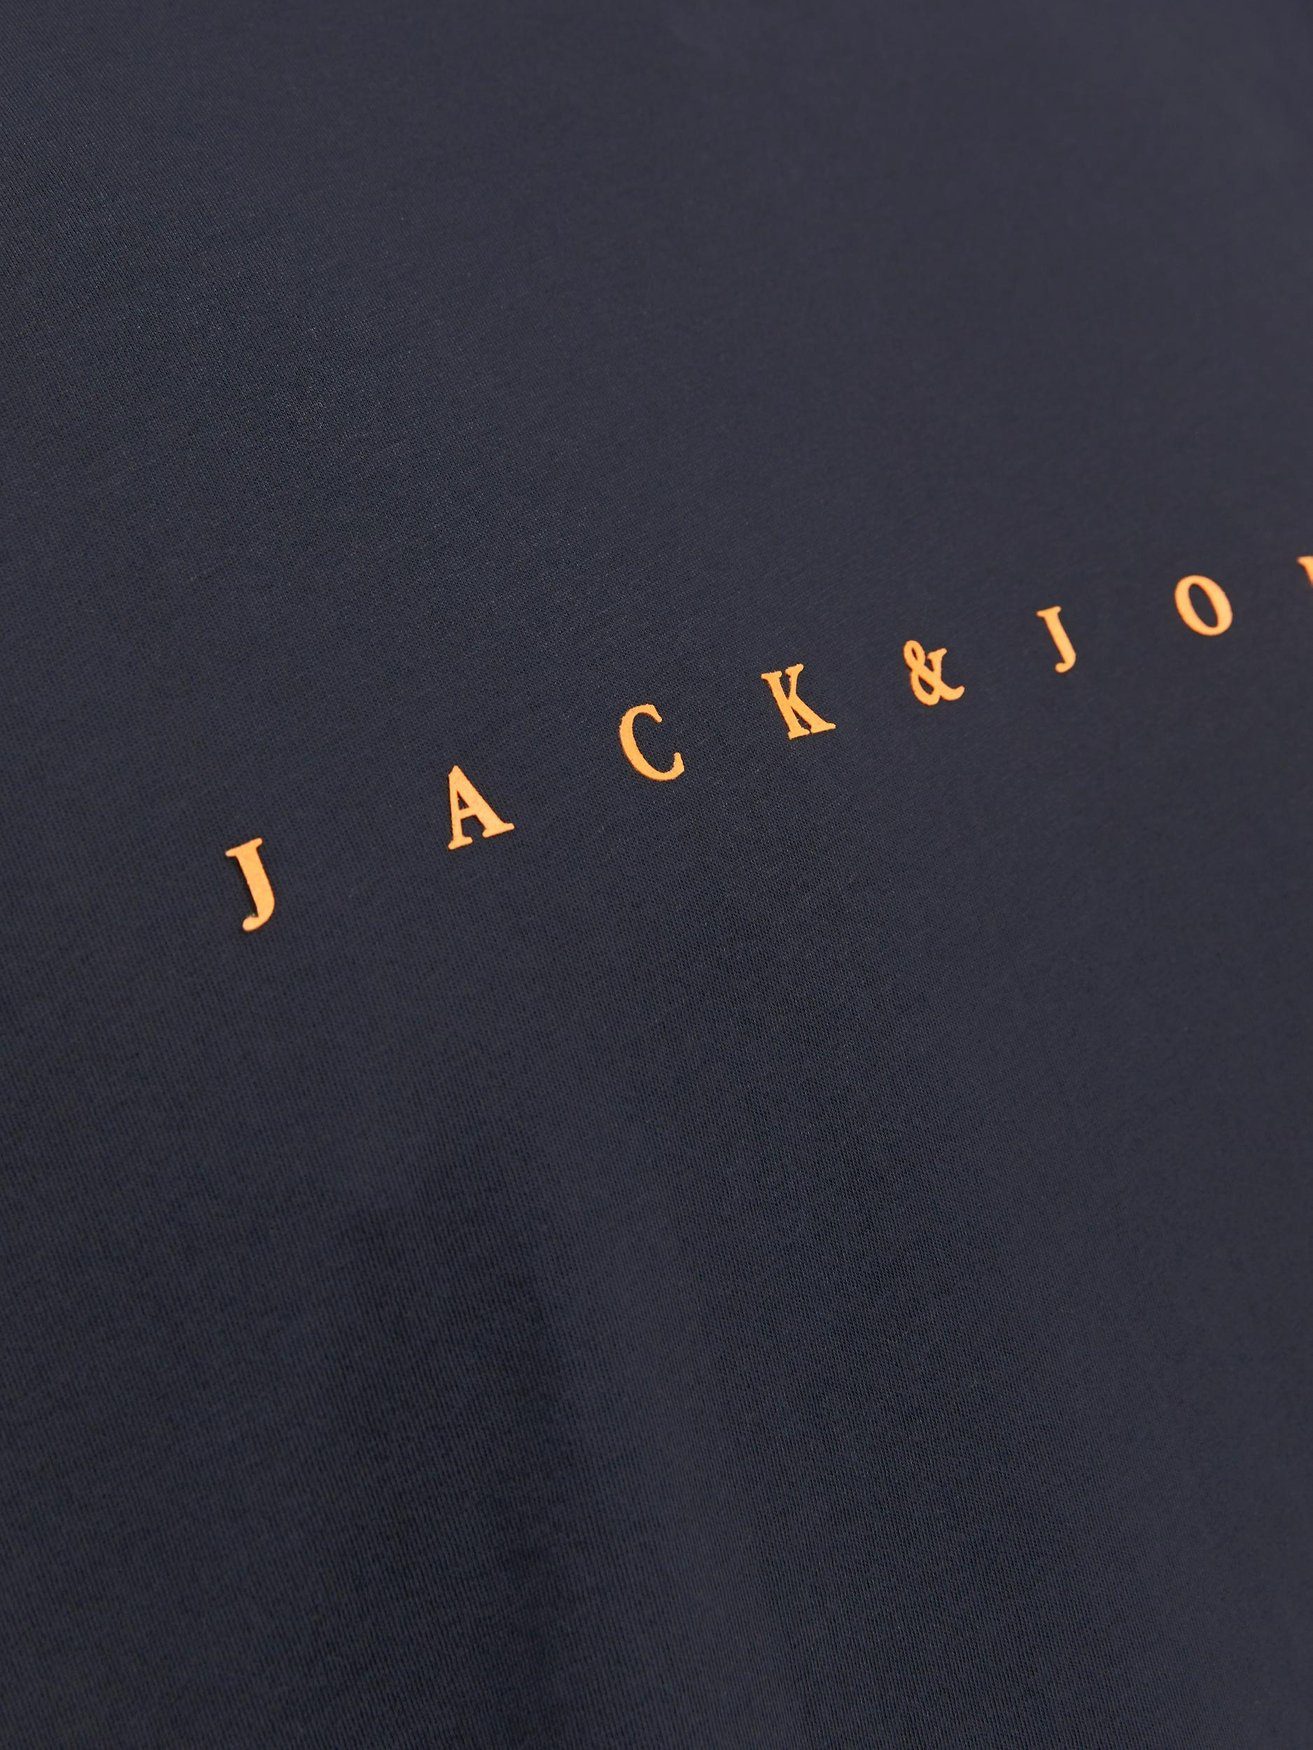 Jack & Jones T-Shirt Logo Size Plus JJESTAR in Dunkelblau Übergröße Kurzarm Shirt 6550 T-Shirt